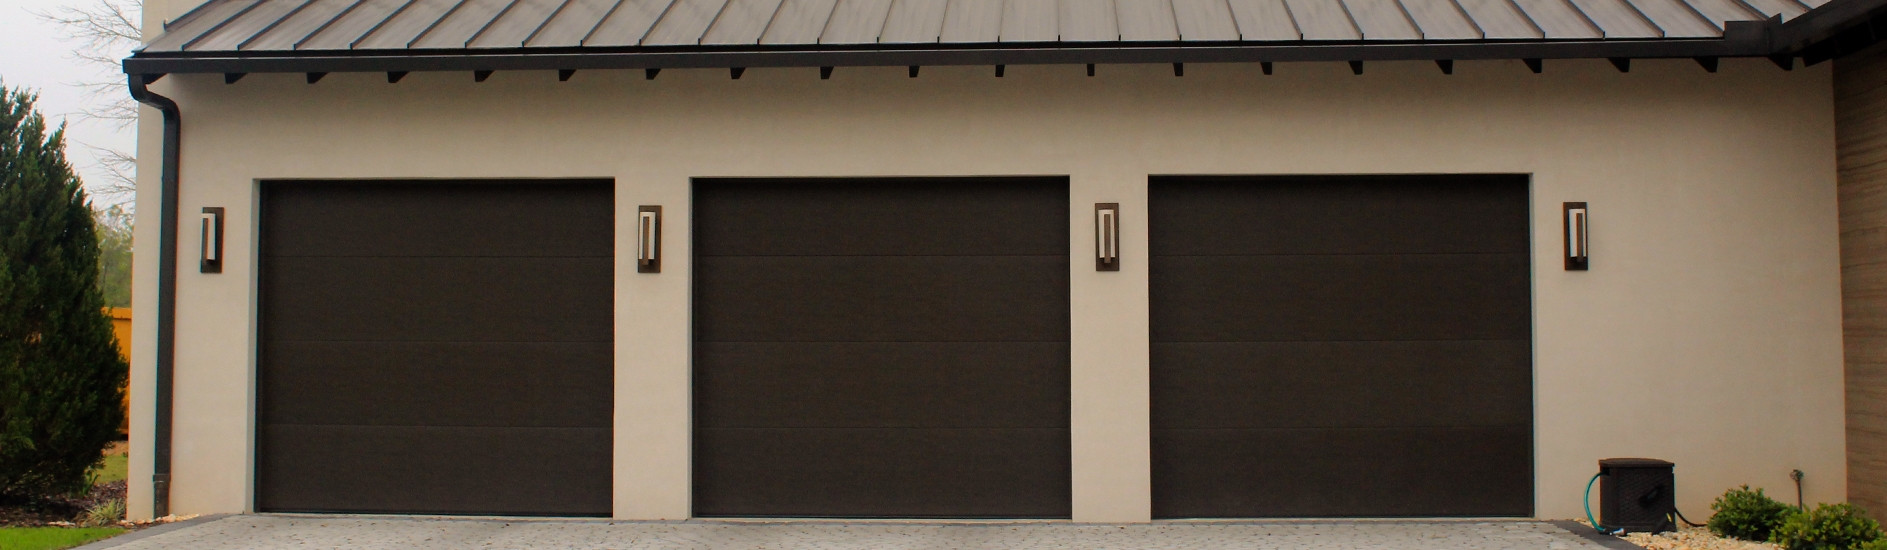 Garage Doors Spokane
 The Incredible Wayne Dalton Garage Doors Spokane with